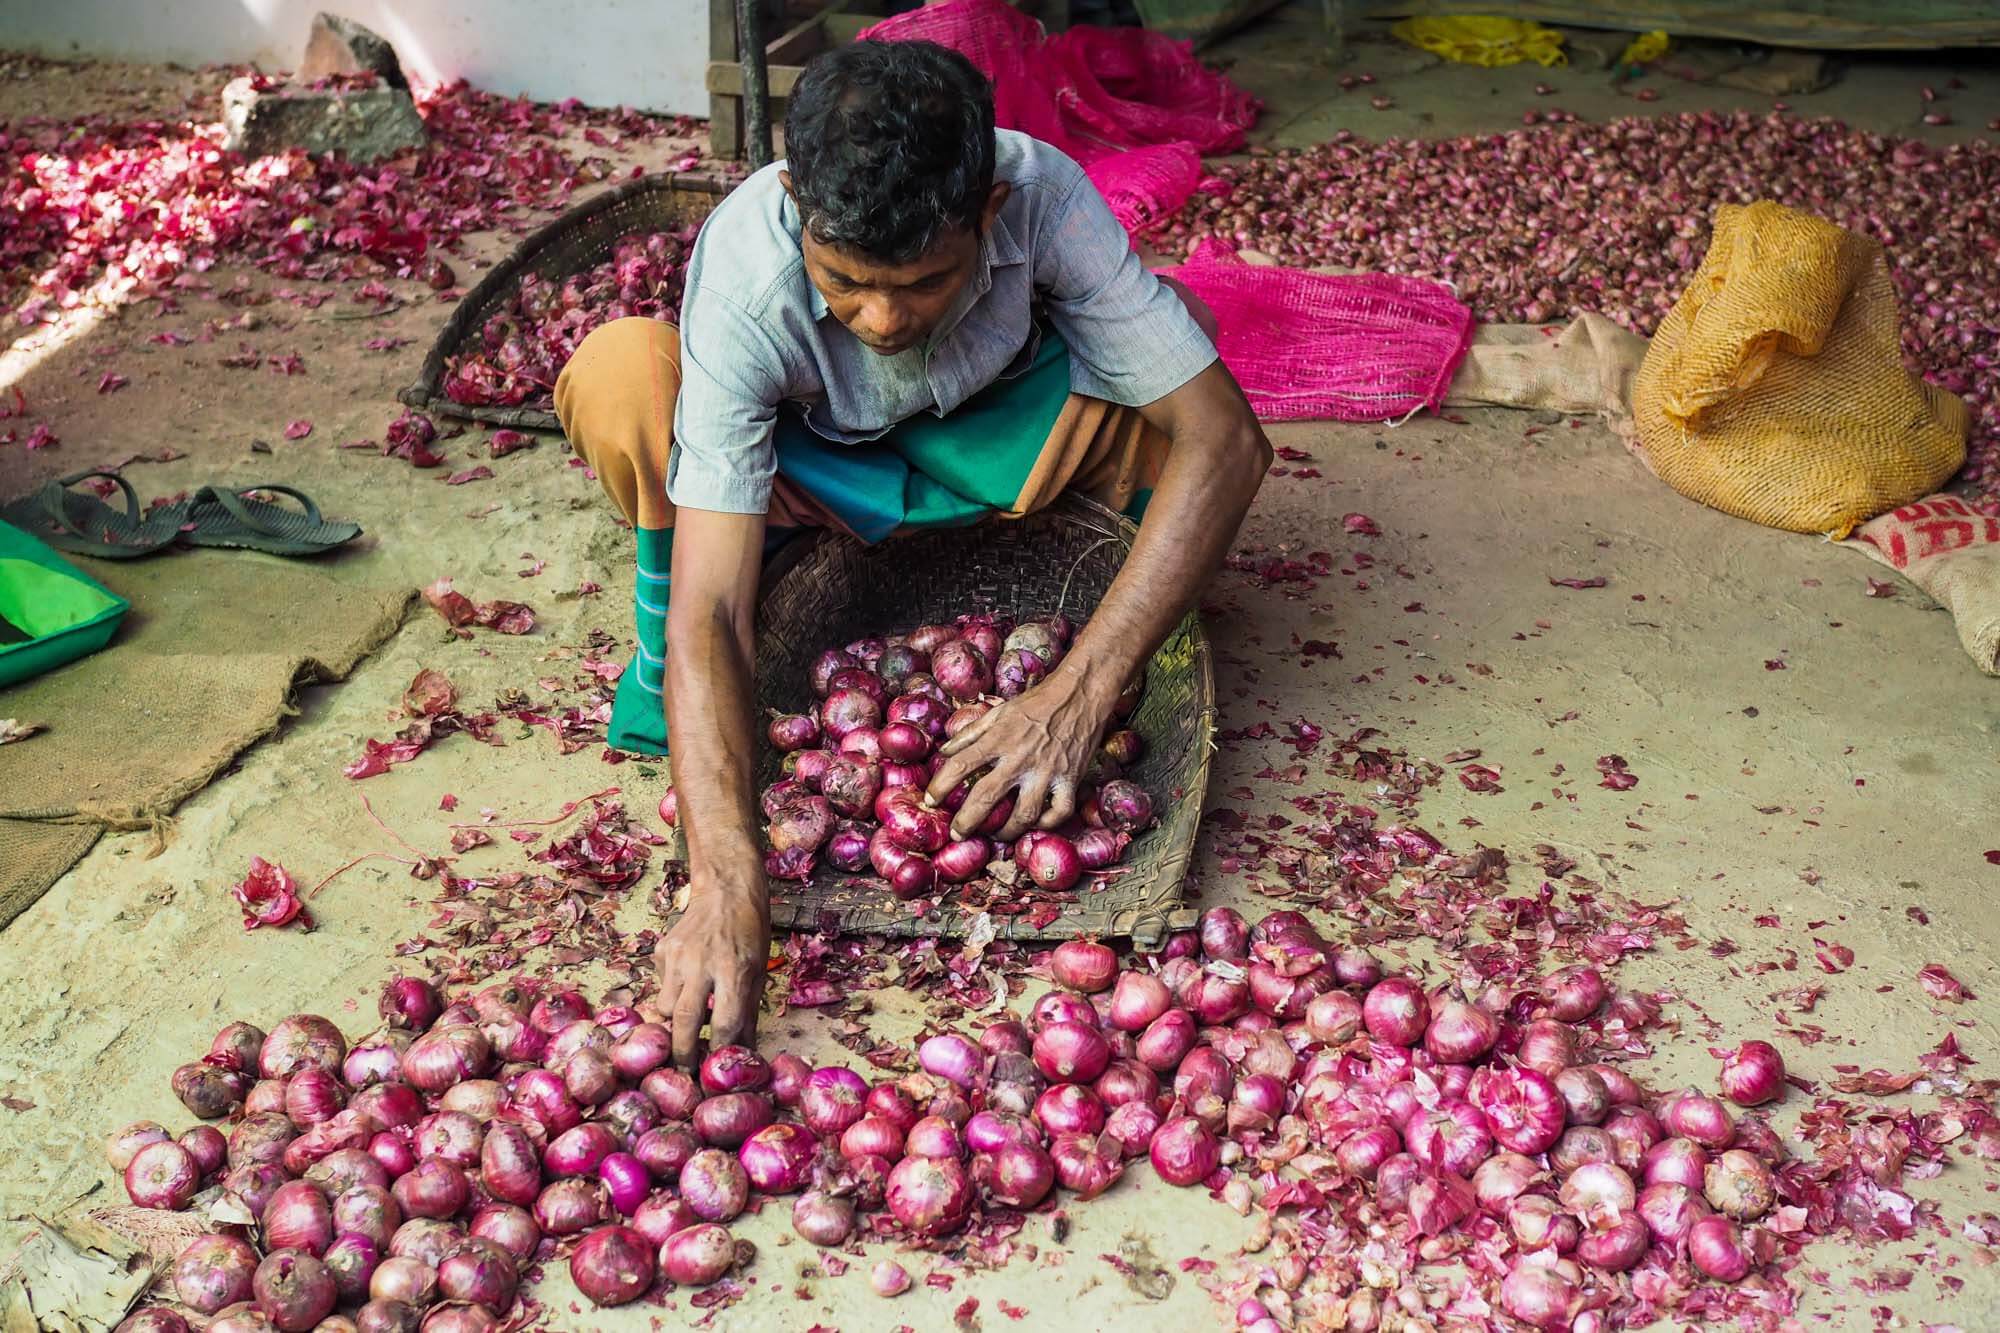 Onions, Sri Lanka - Travel photographer